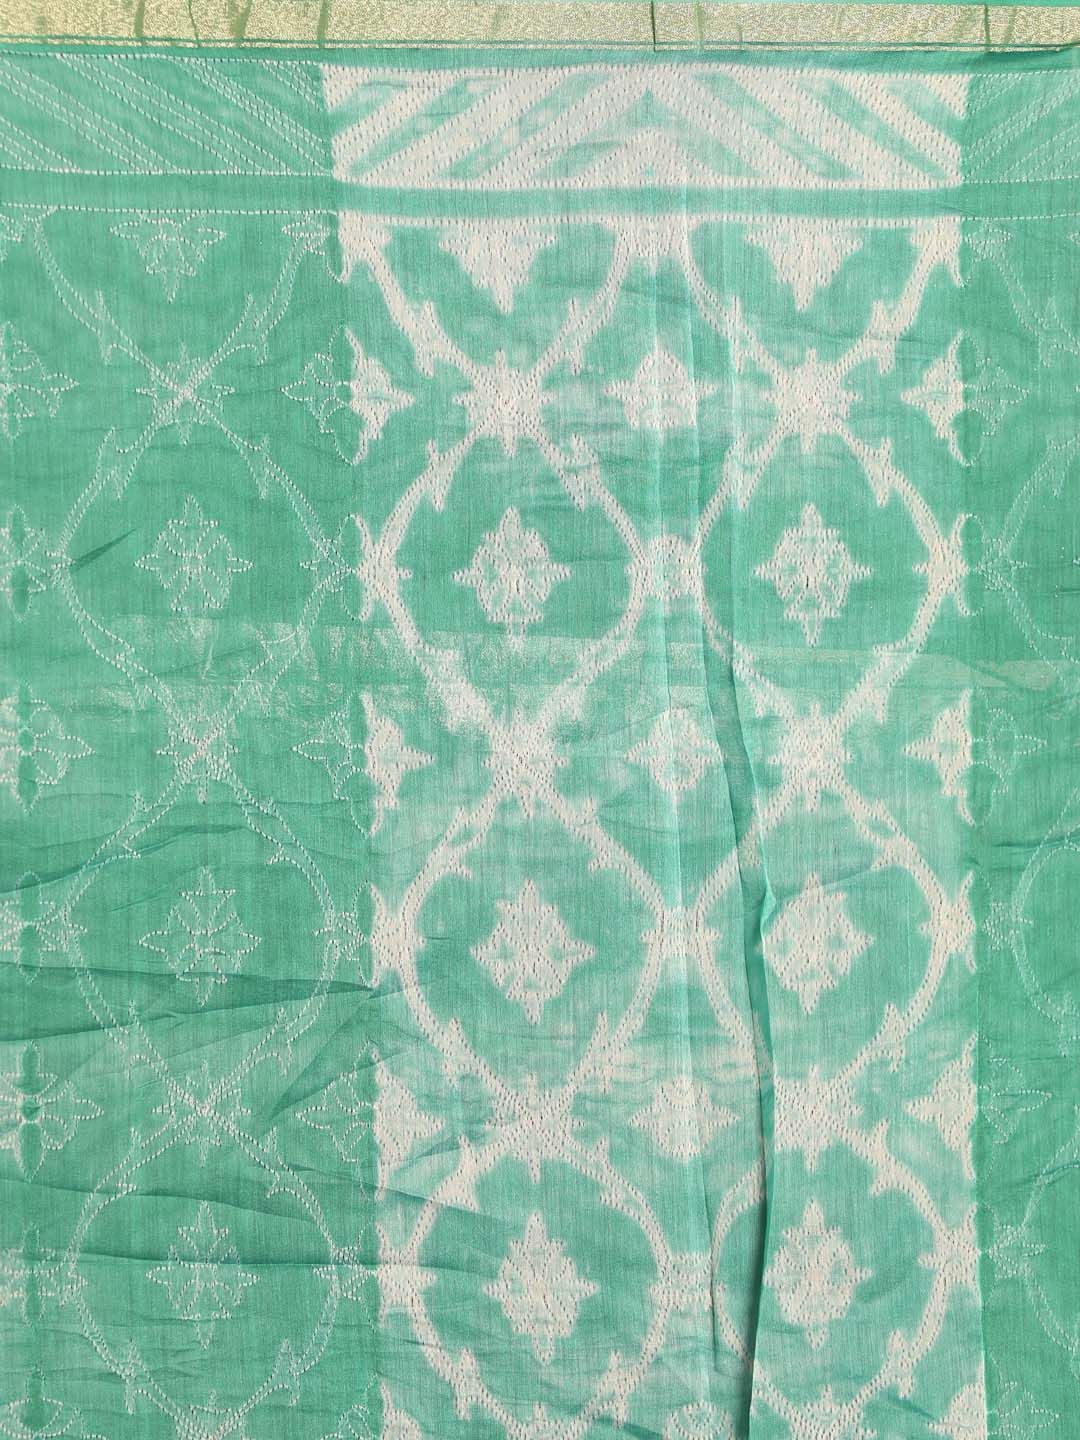 Indethnic Shibori Silk Cotton Saree in Sea Green - Saree Detail View